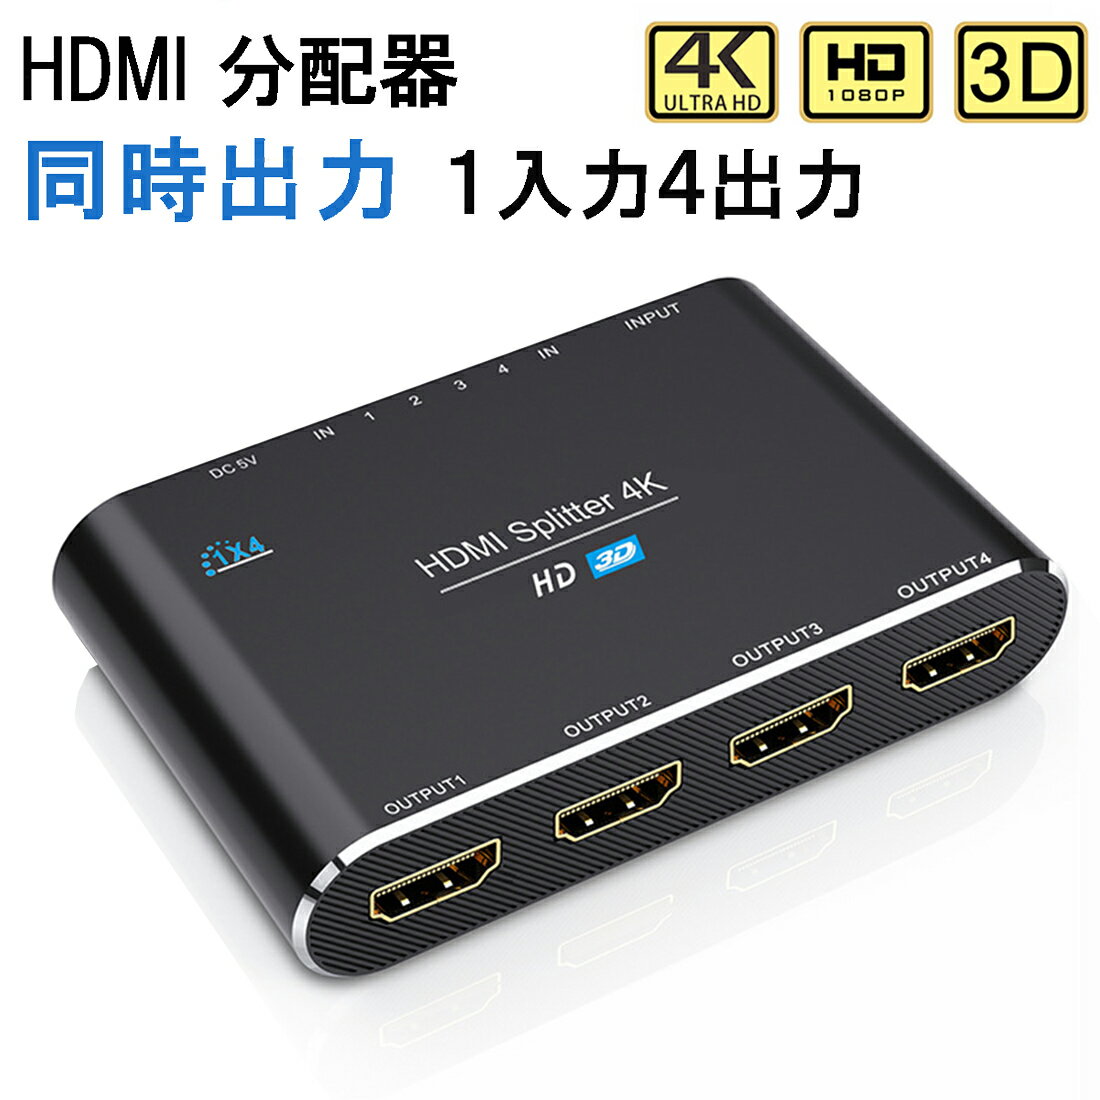 HDMI分配器 同時出力 HDCP2.0 スプリッター 1入力4出力 4K/3D/1080P 対応 設定不要 音声出力 switch PS3 PS4 HDTV DVD Xbox TV Stick ディスプレイ プロジェクターなど対応 1入力 5ポート